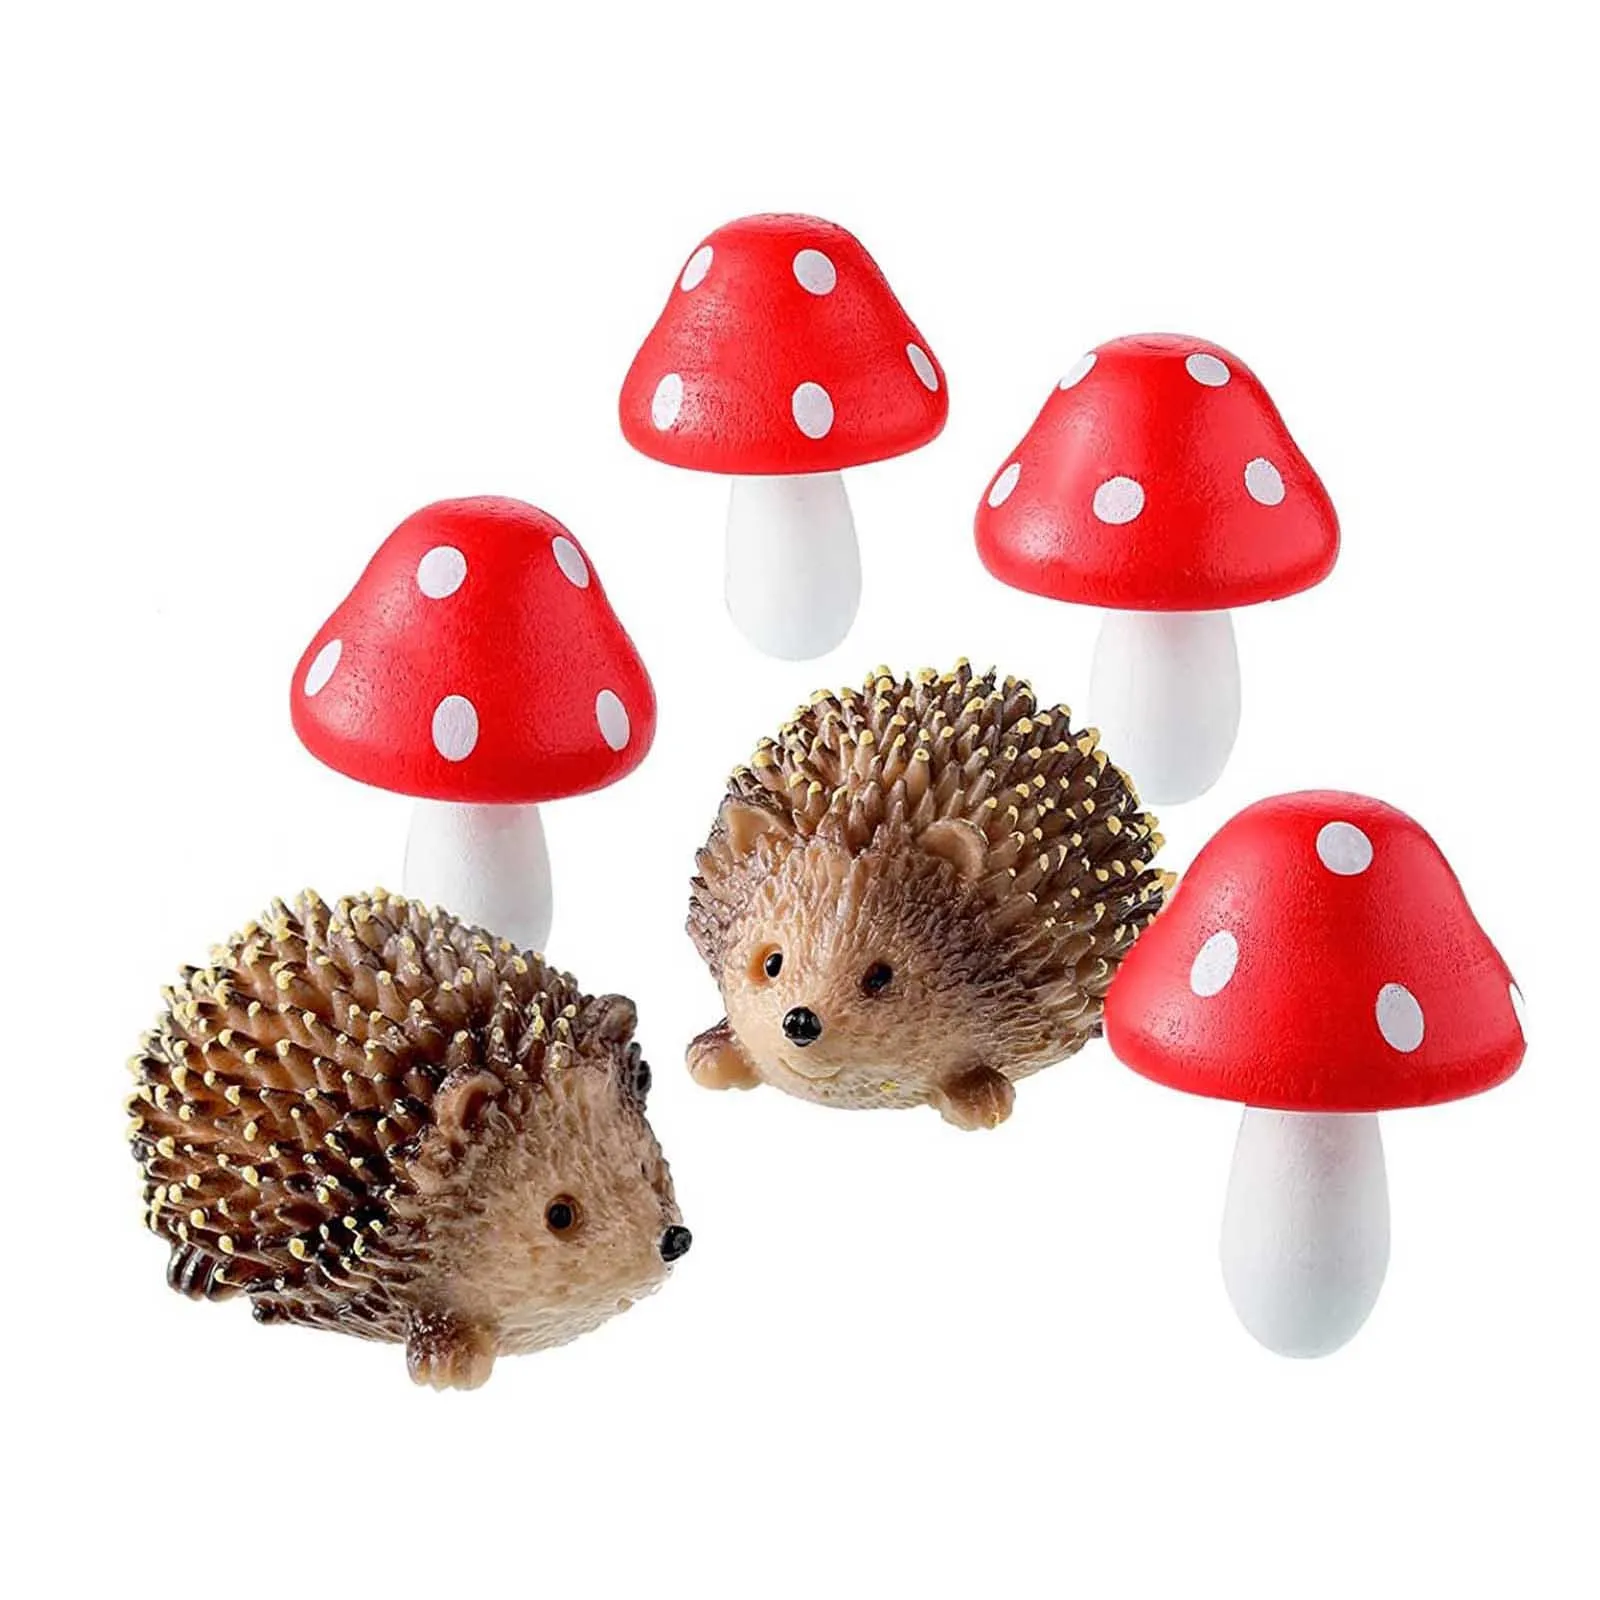 Xiton Miniature Resin Garden Fairy Ornament Flower Pot Plant Pot Home Decor Hedgehog & Mushroom Set 